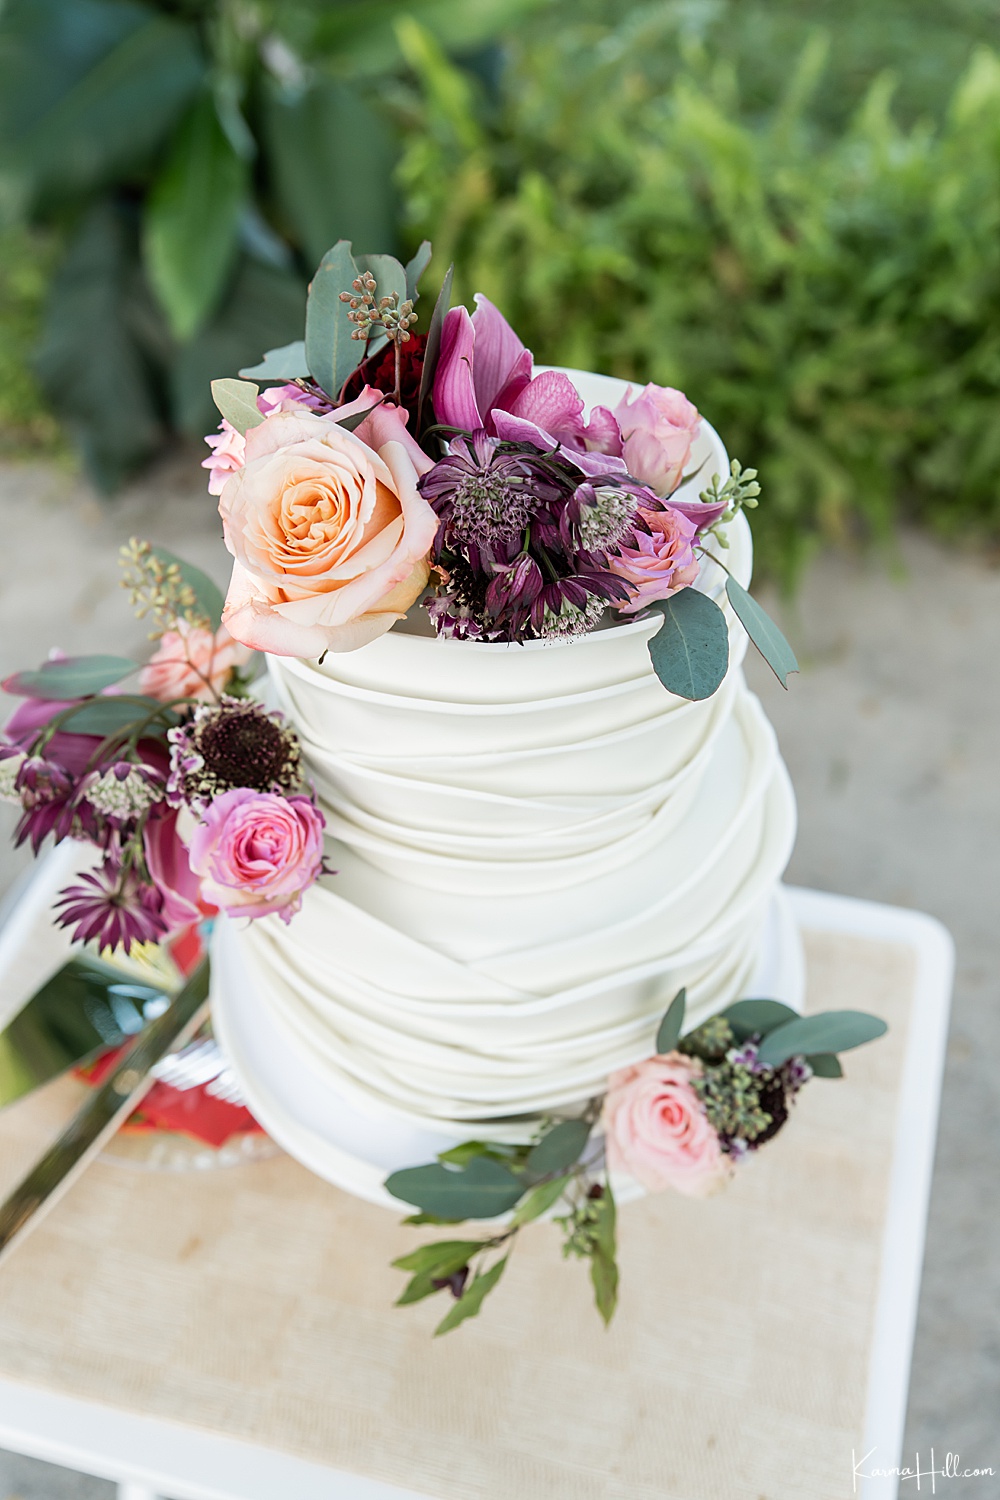 maui wedding cake - best maui wedding cakes - hawaii wedding cake ideas 